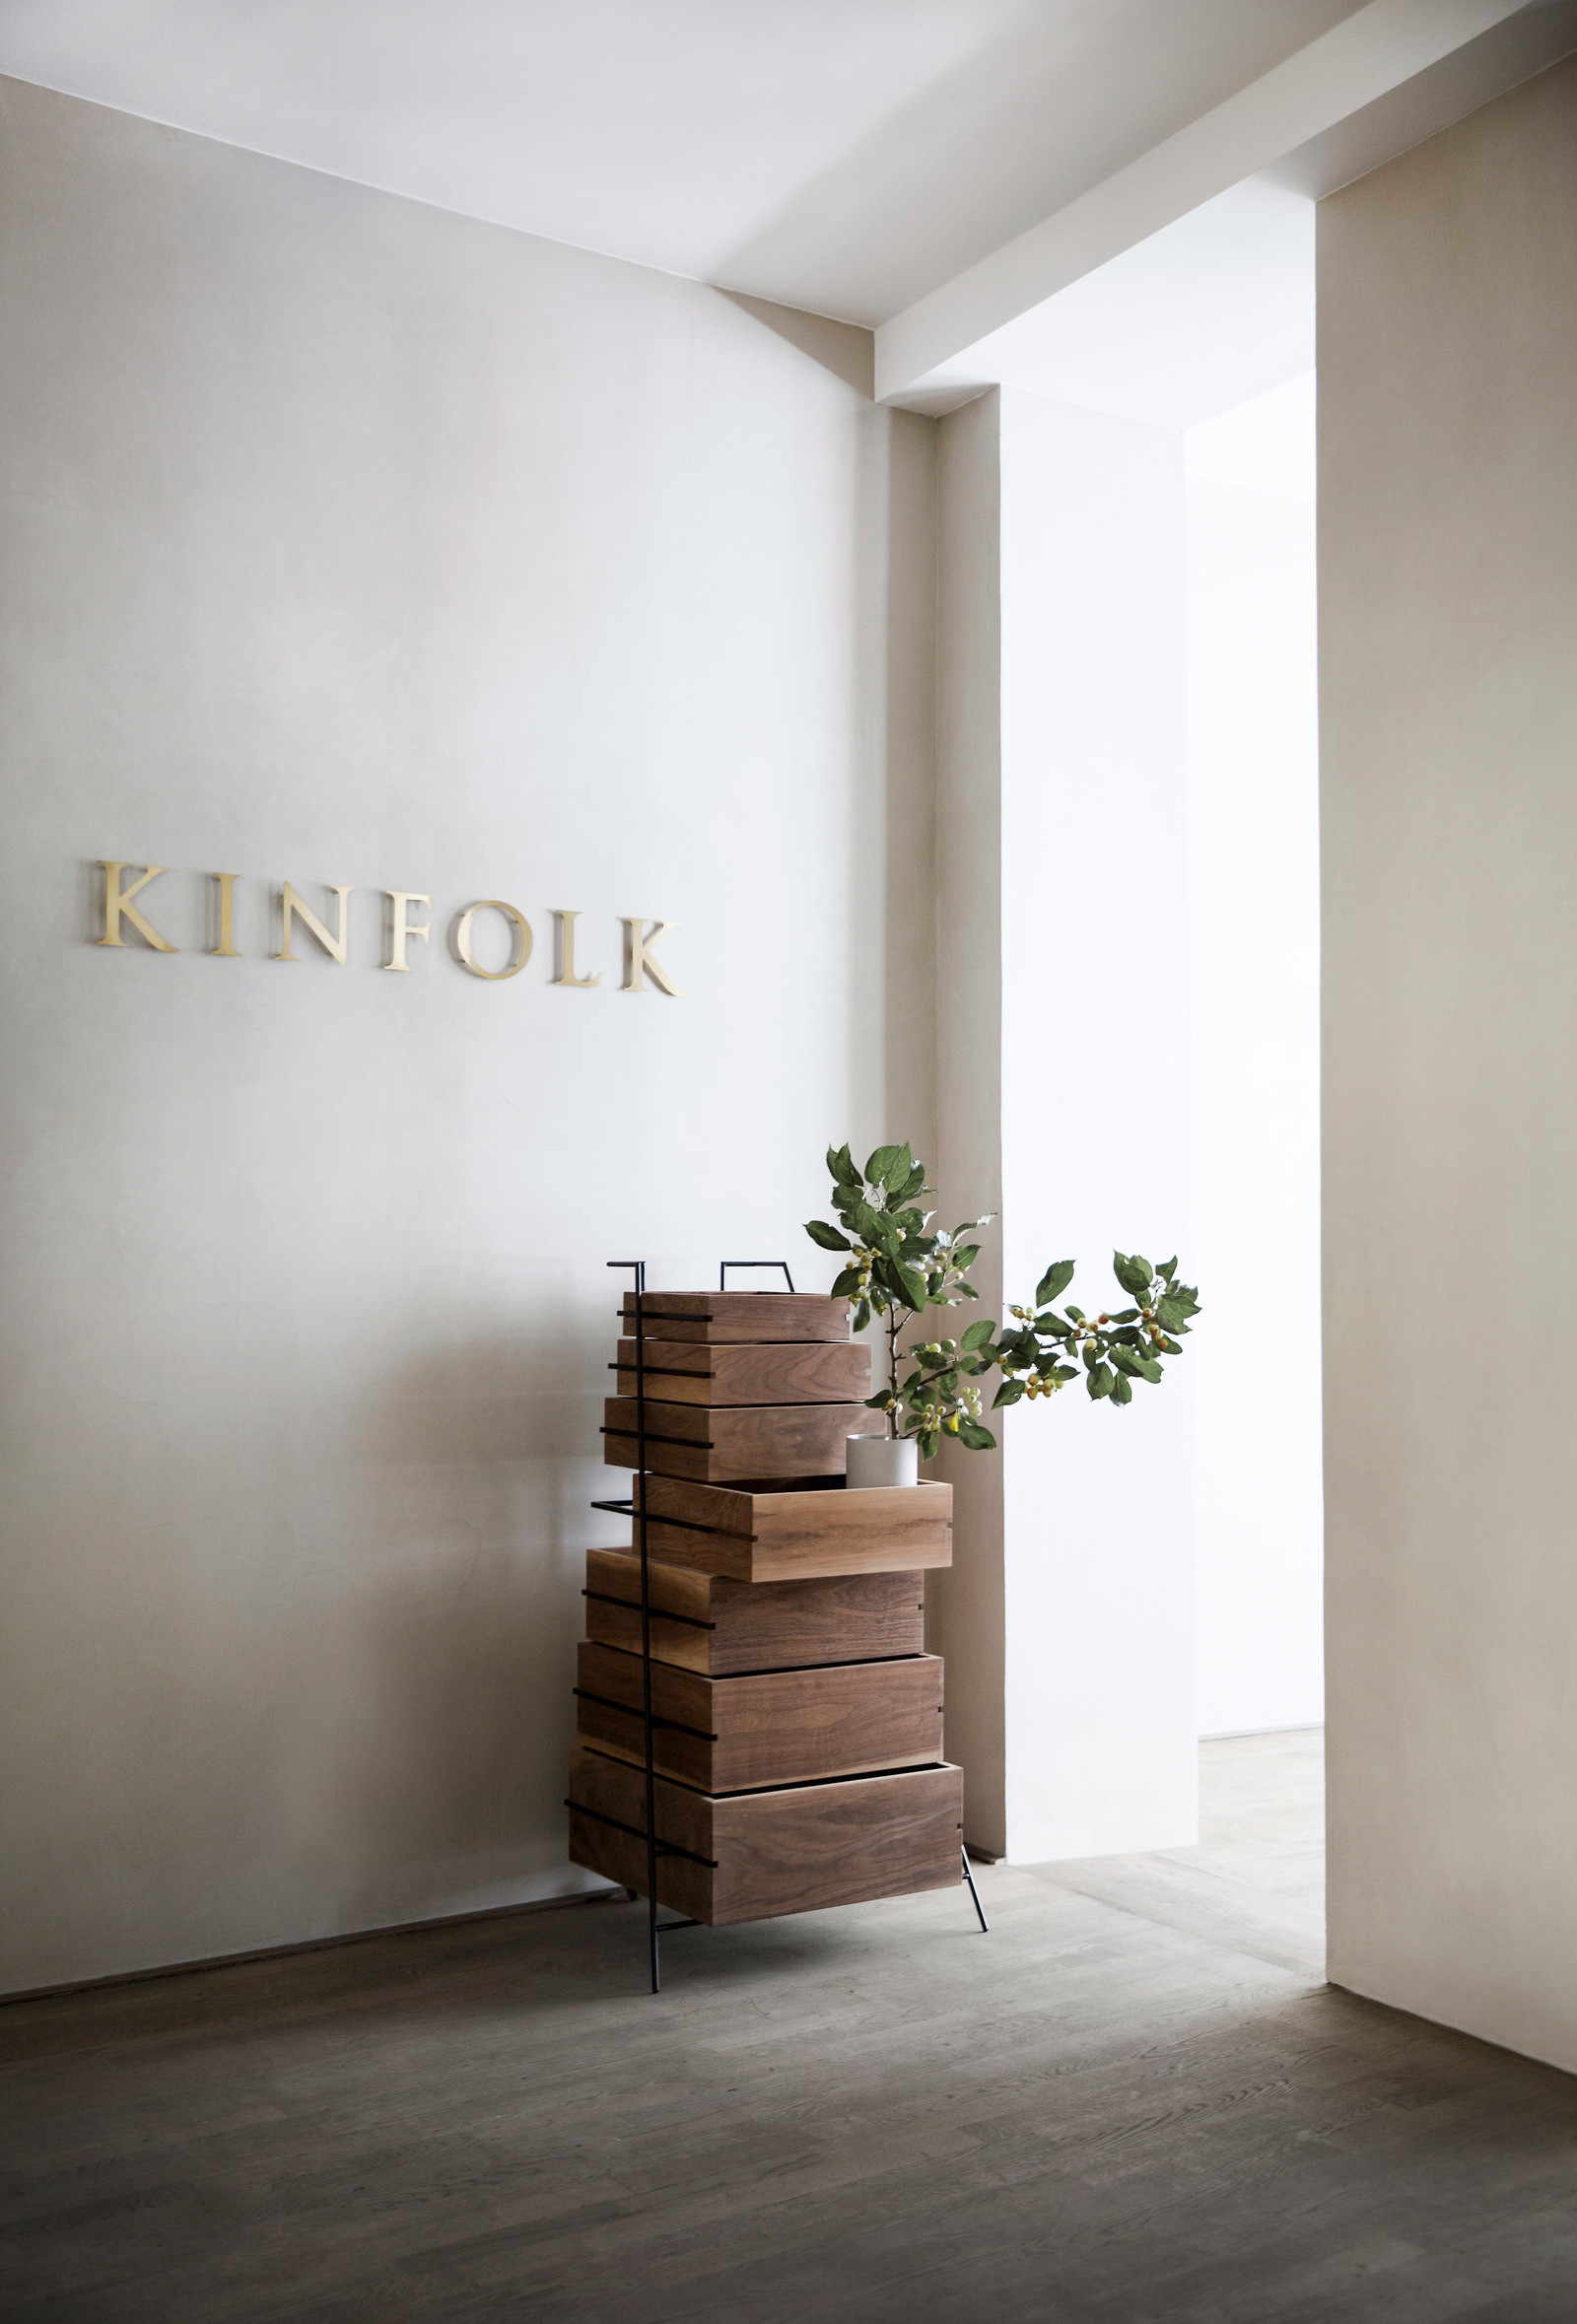 Kinfolk Editorial Office in Copenhagen